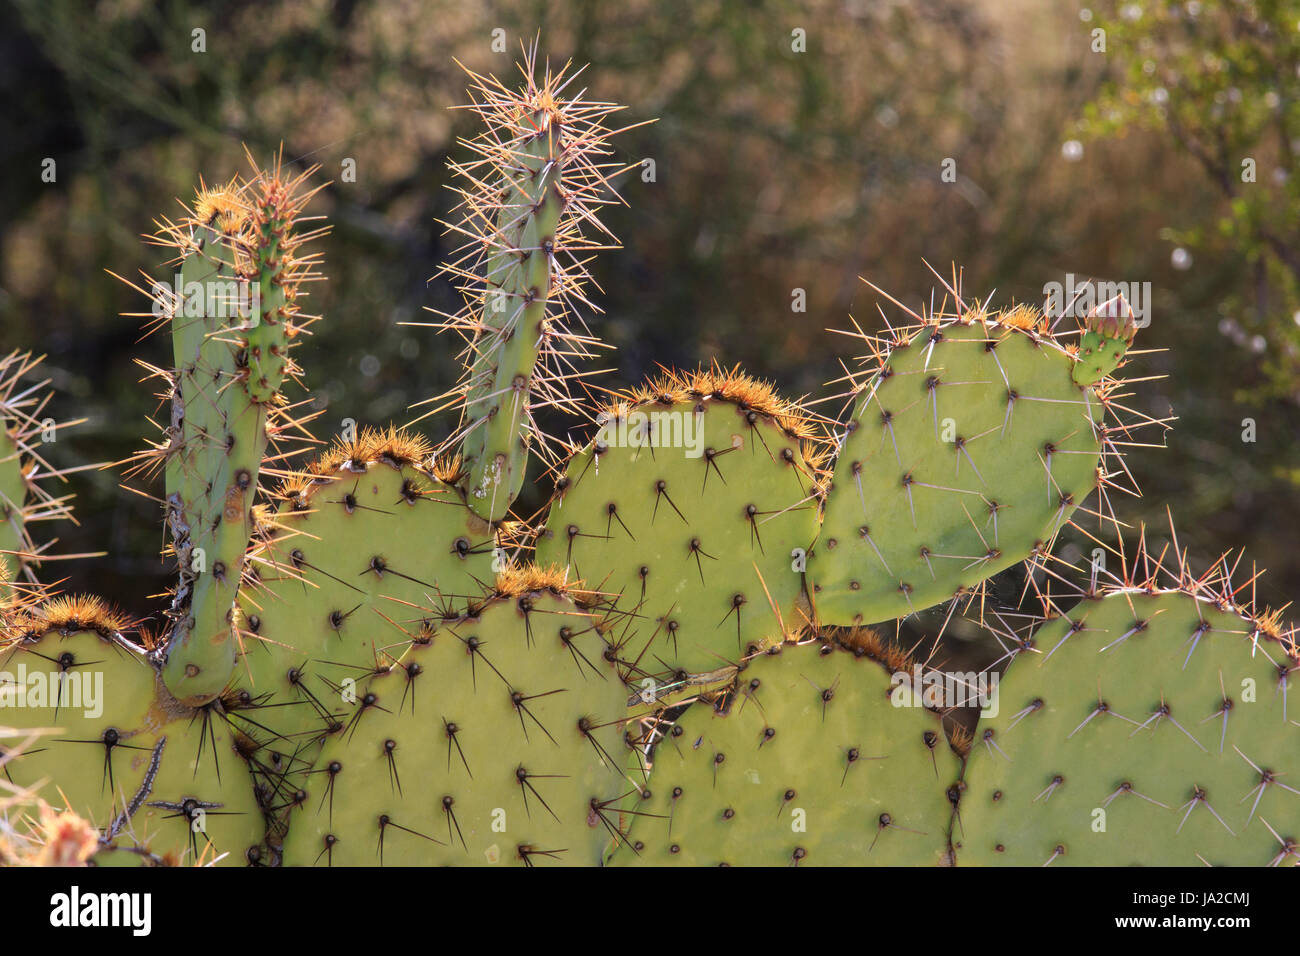 Prickly pear cactus (Opuntia sp.) Stock Photo